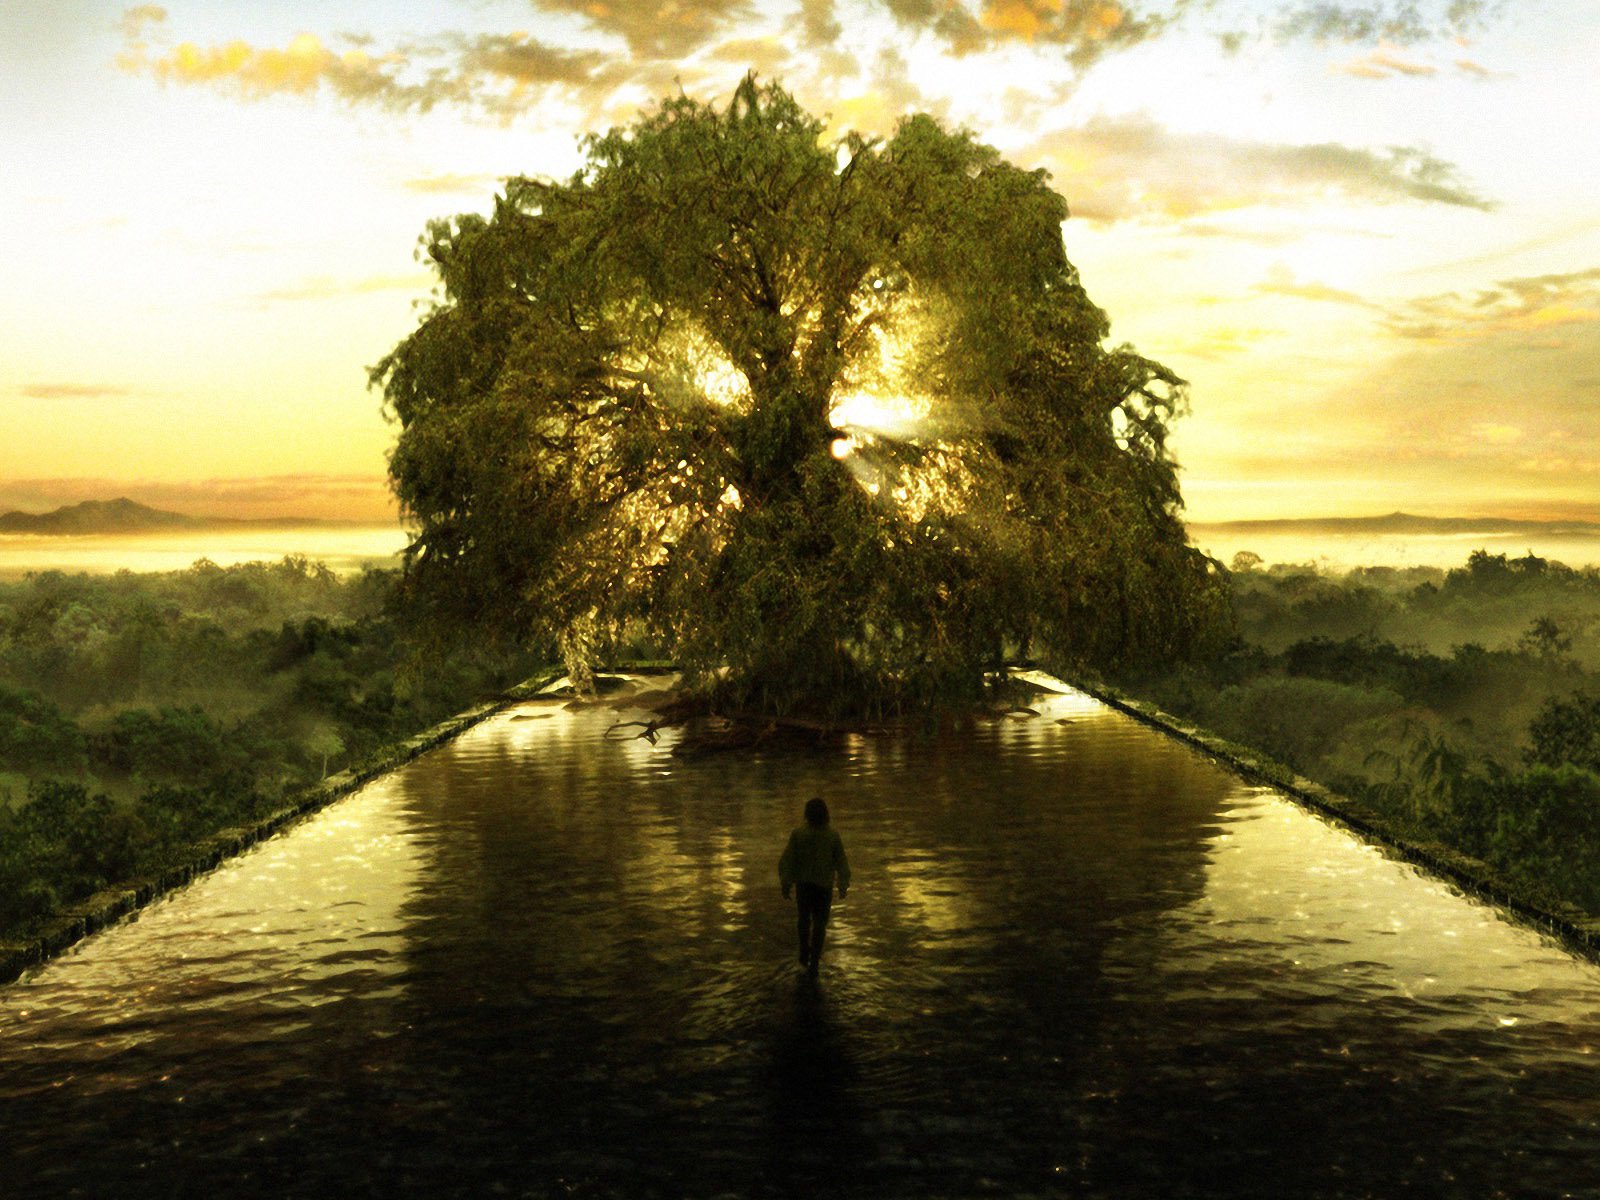 The Tree of Life: Meaning and Symbolism - Mythologian